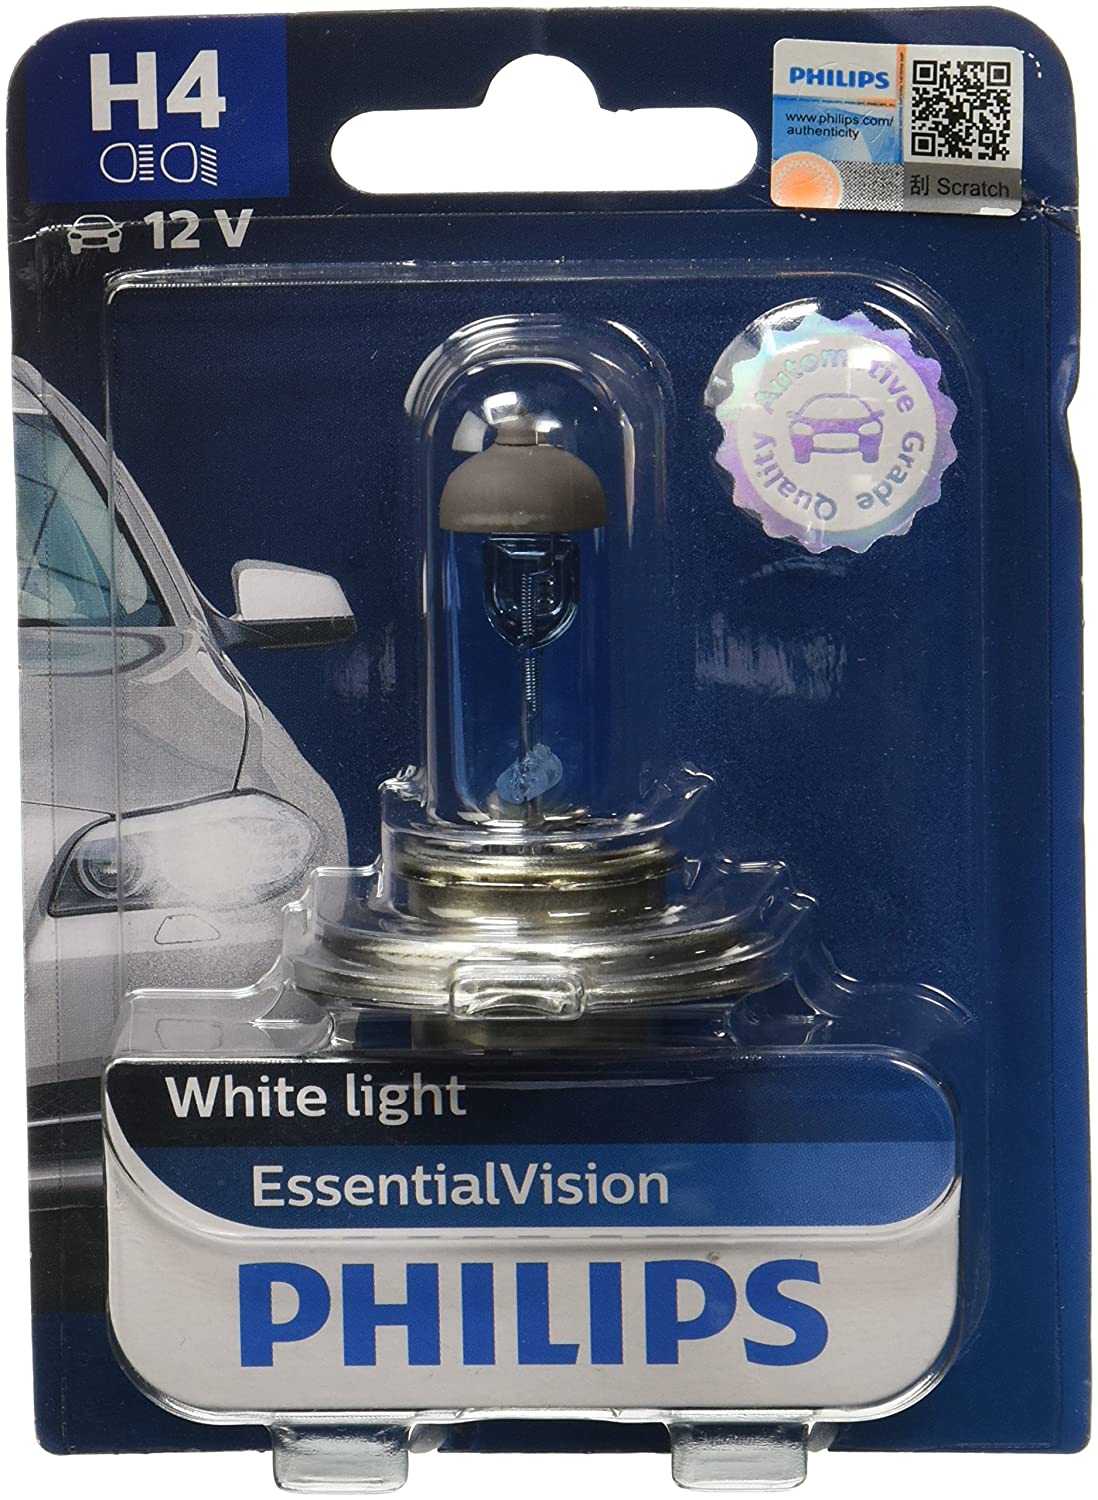 PHILIPS H4 12V Essentialvision Headlight White Light - TheCarNext